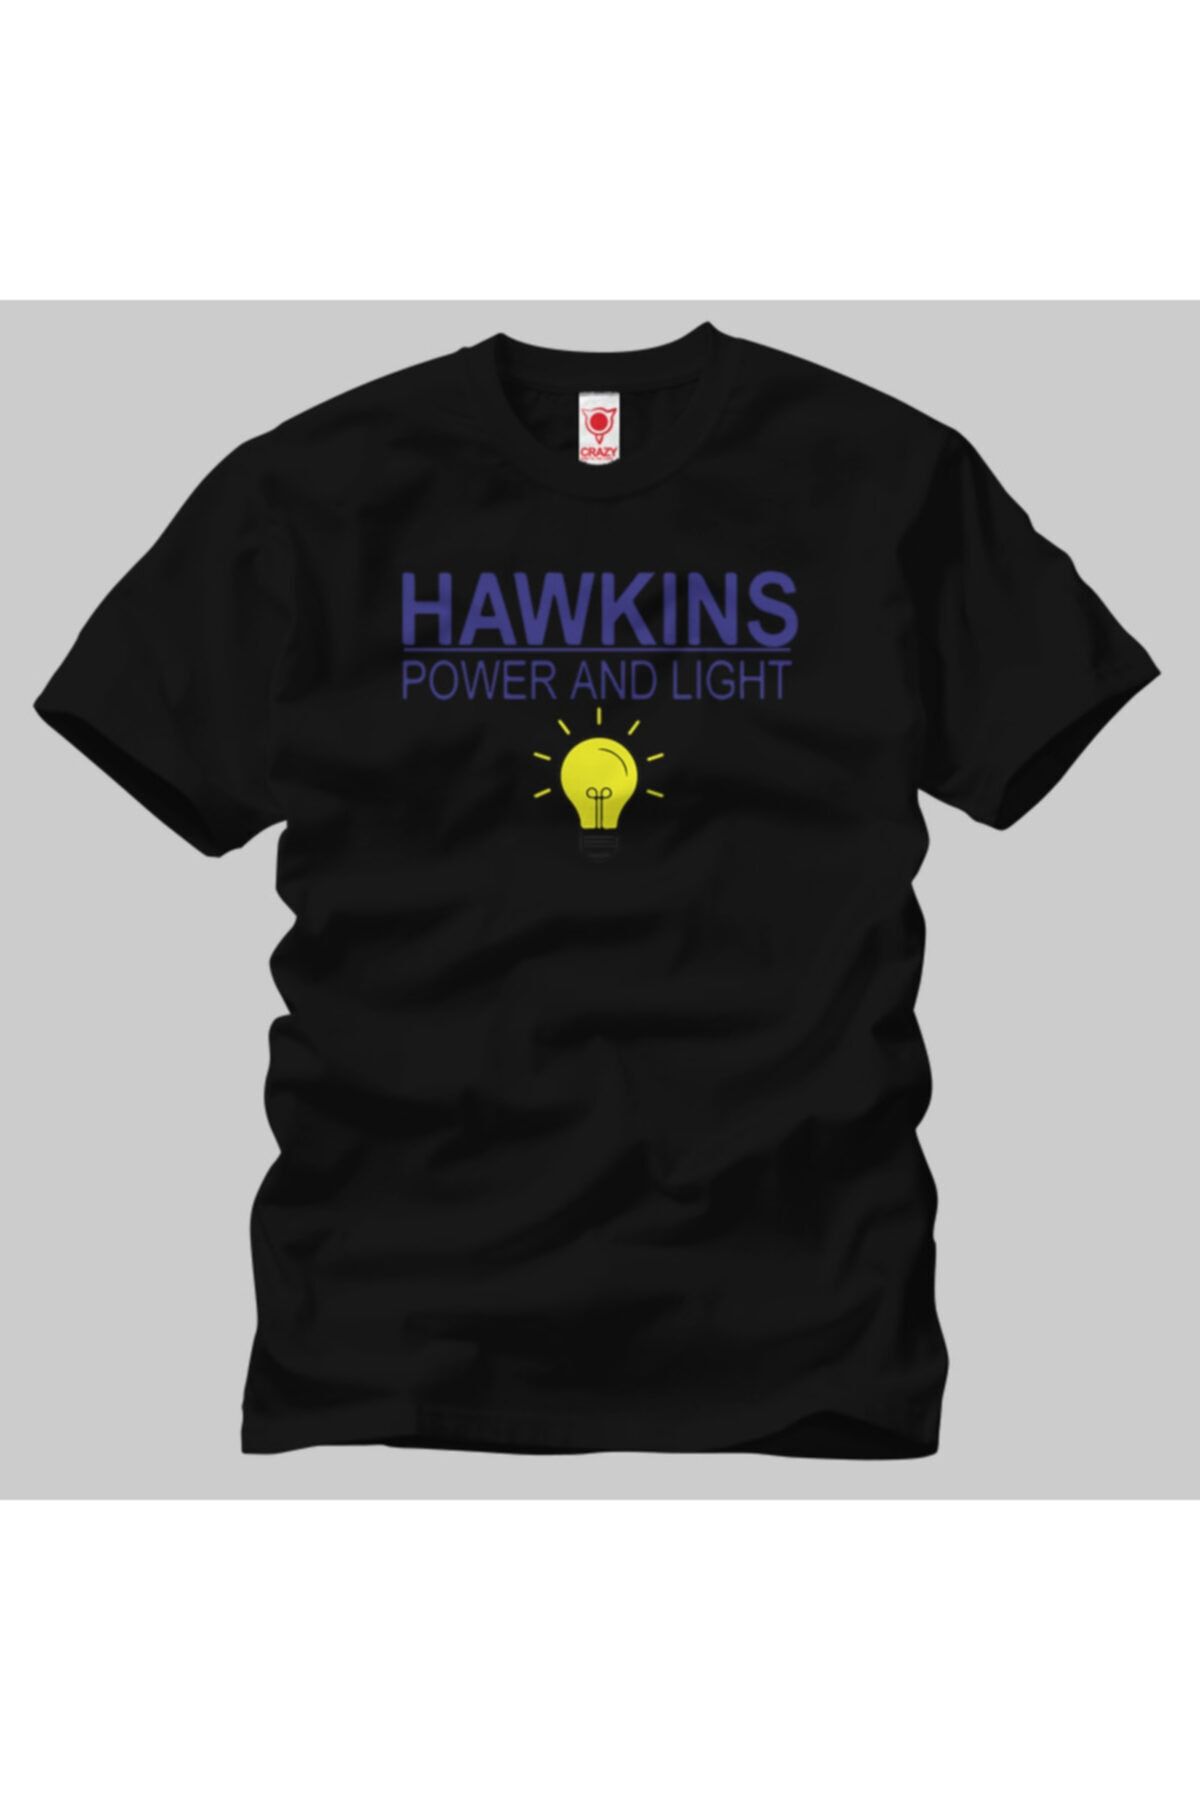 Crazy Stranger Things Hawkins Power And Light Erkek Tişört